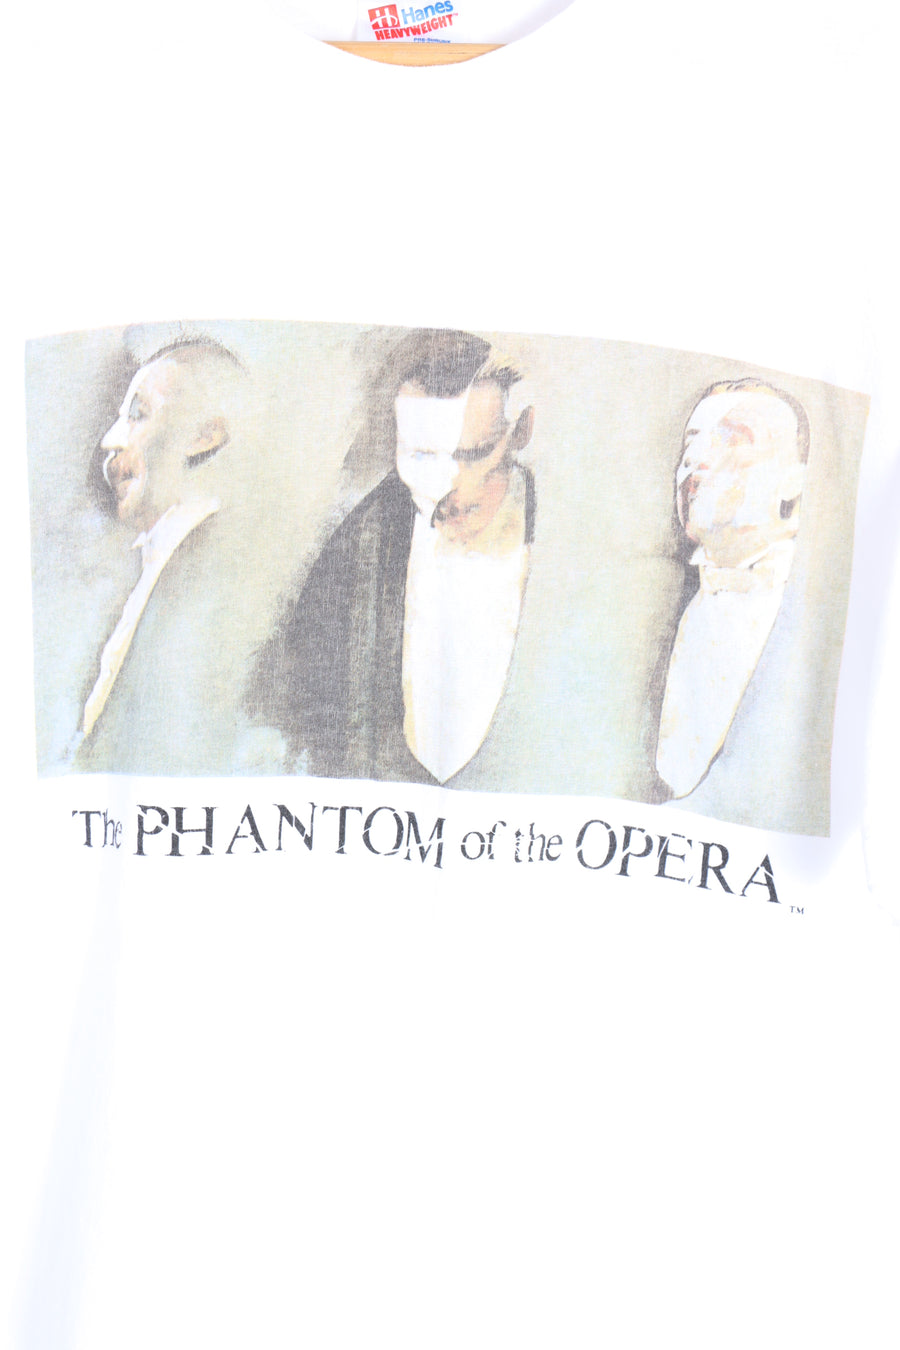 The Phantom of the Opera Single Stitch Graphic Tee (XL)